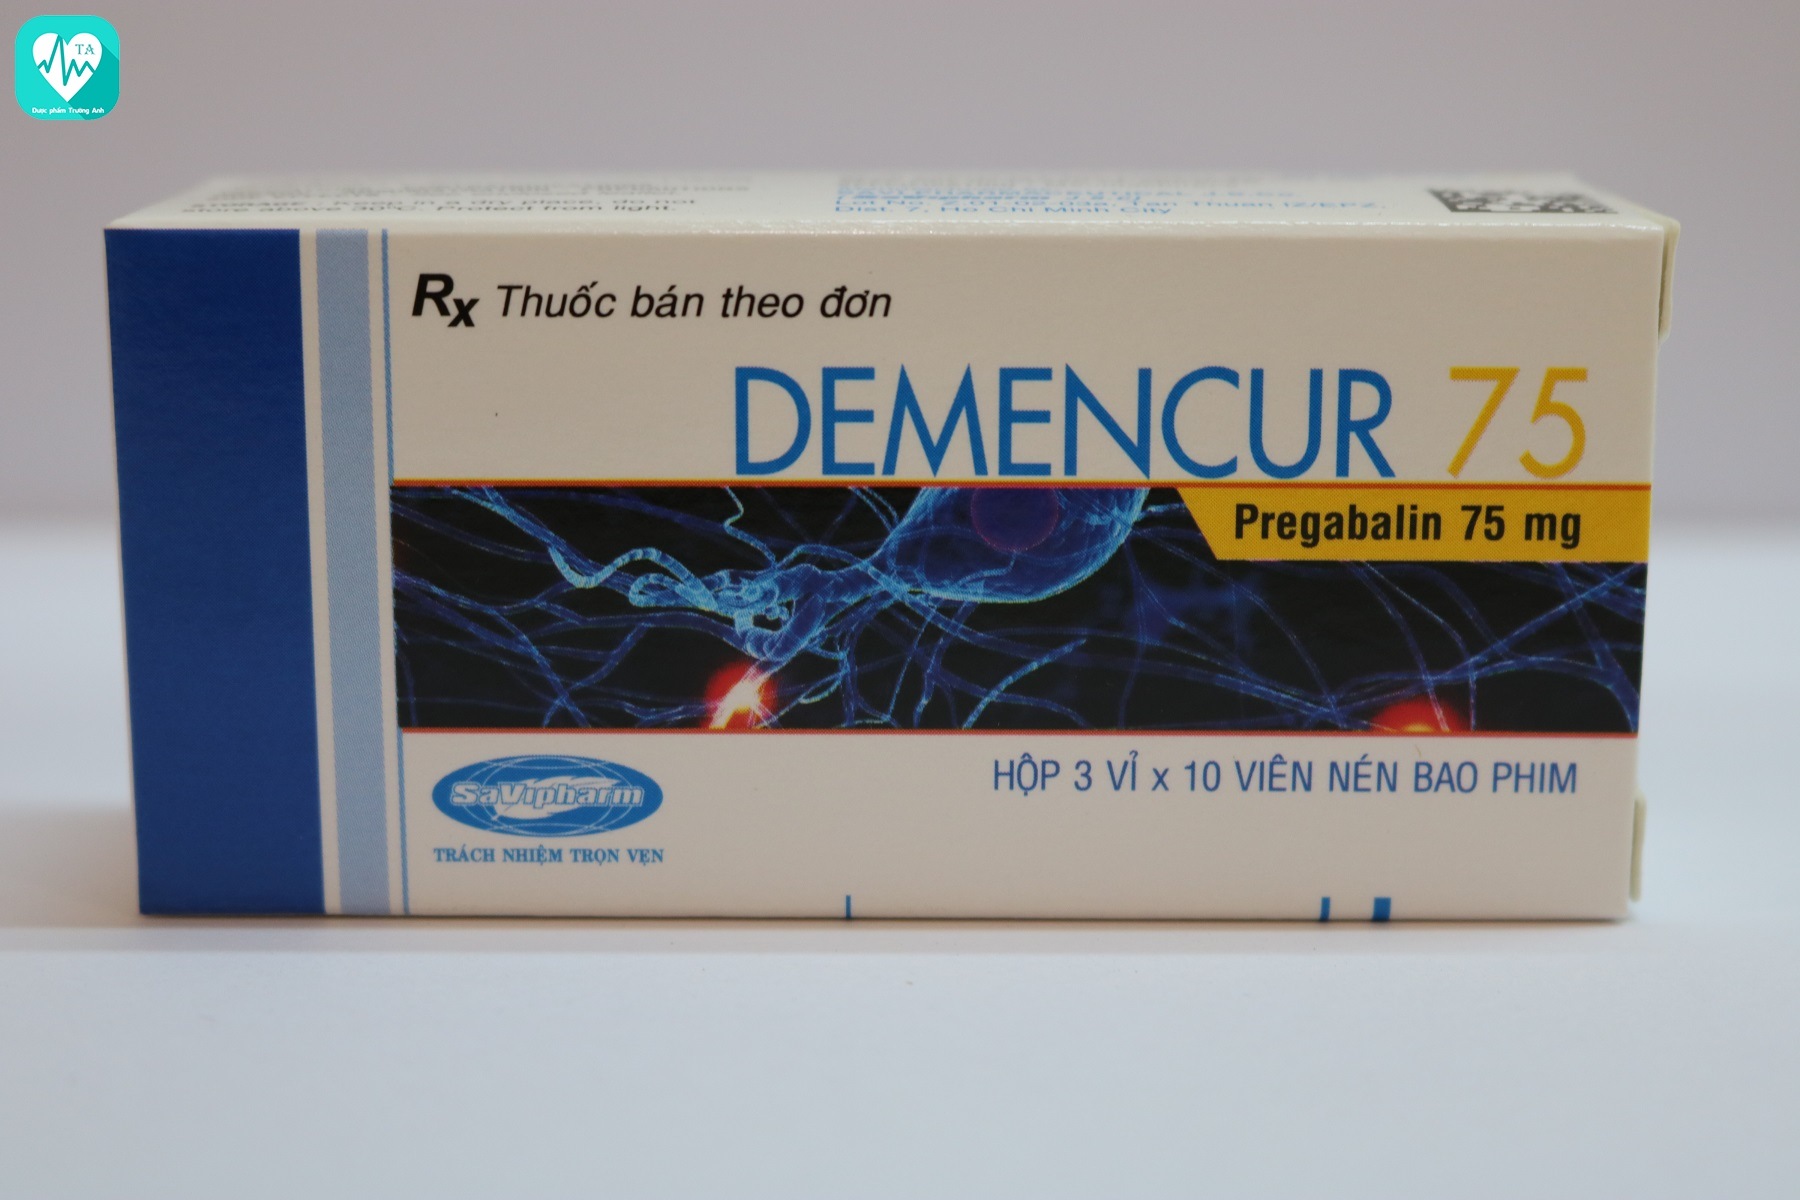 Demencur 75 - Thuốc điều trị đau thần kinh của Savipharm